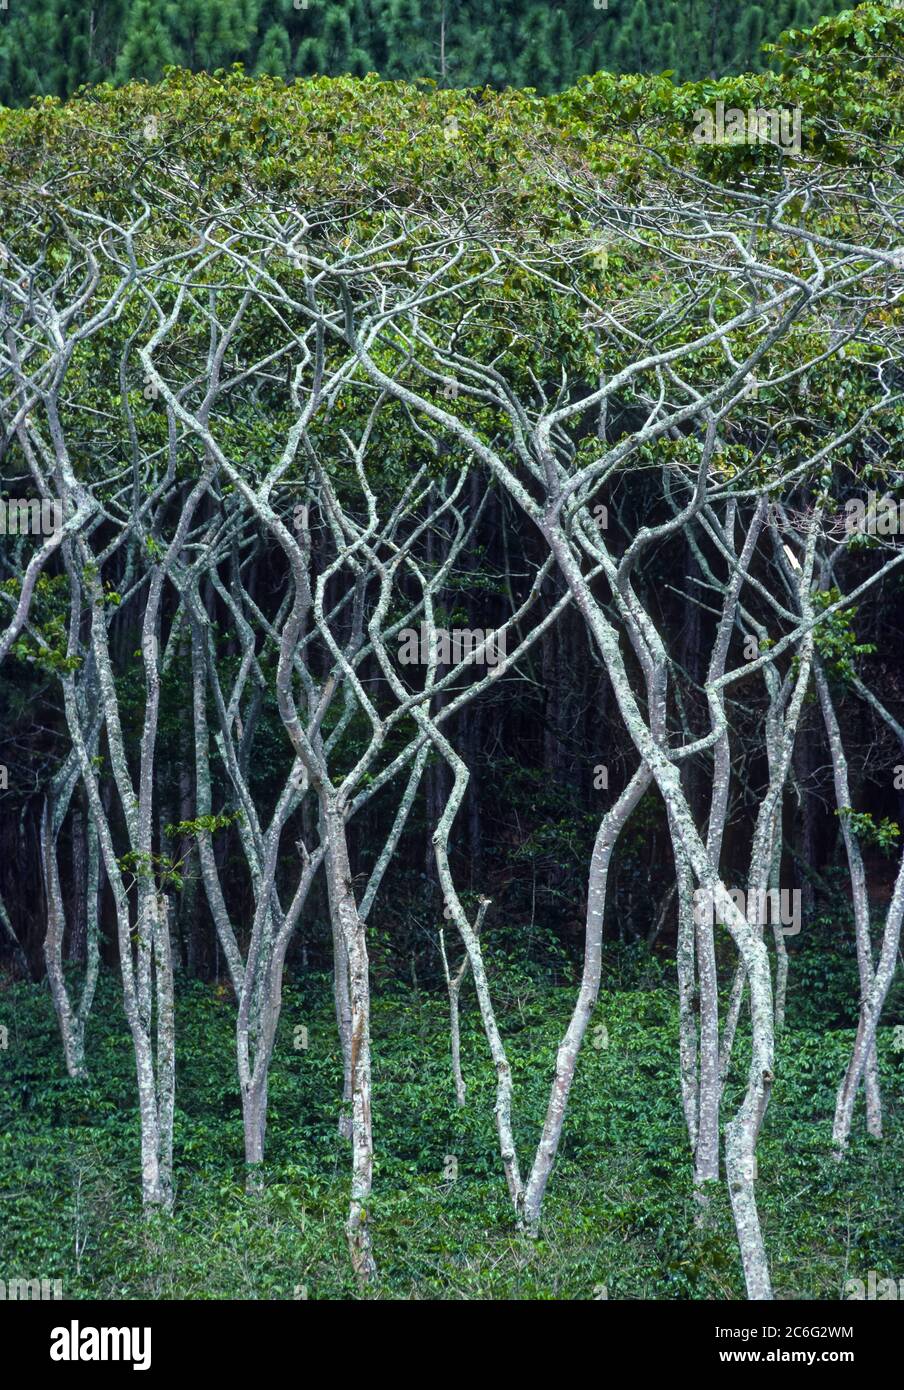 TACHIRA STATE, VENEZUELA - Coffee bushes growing under shade trees. Stock Photo